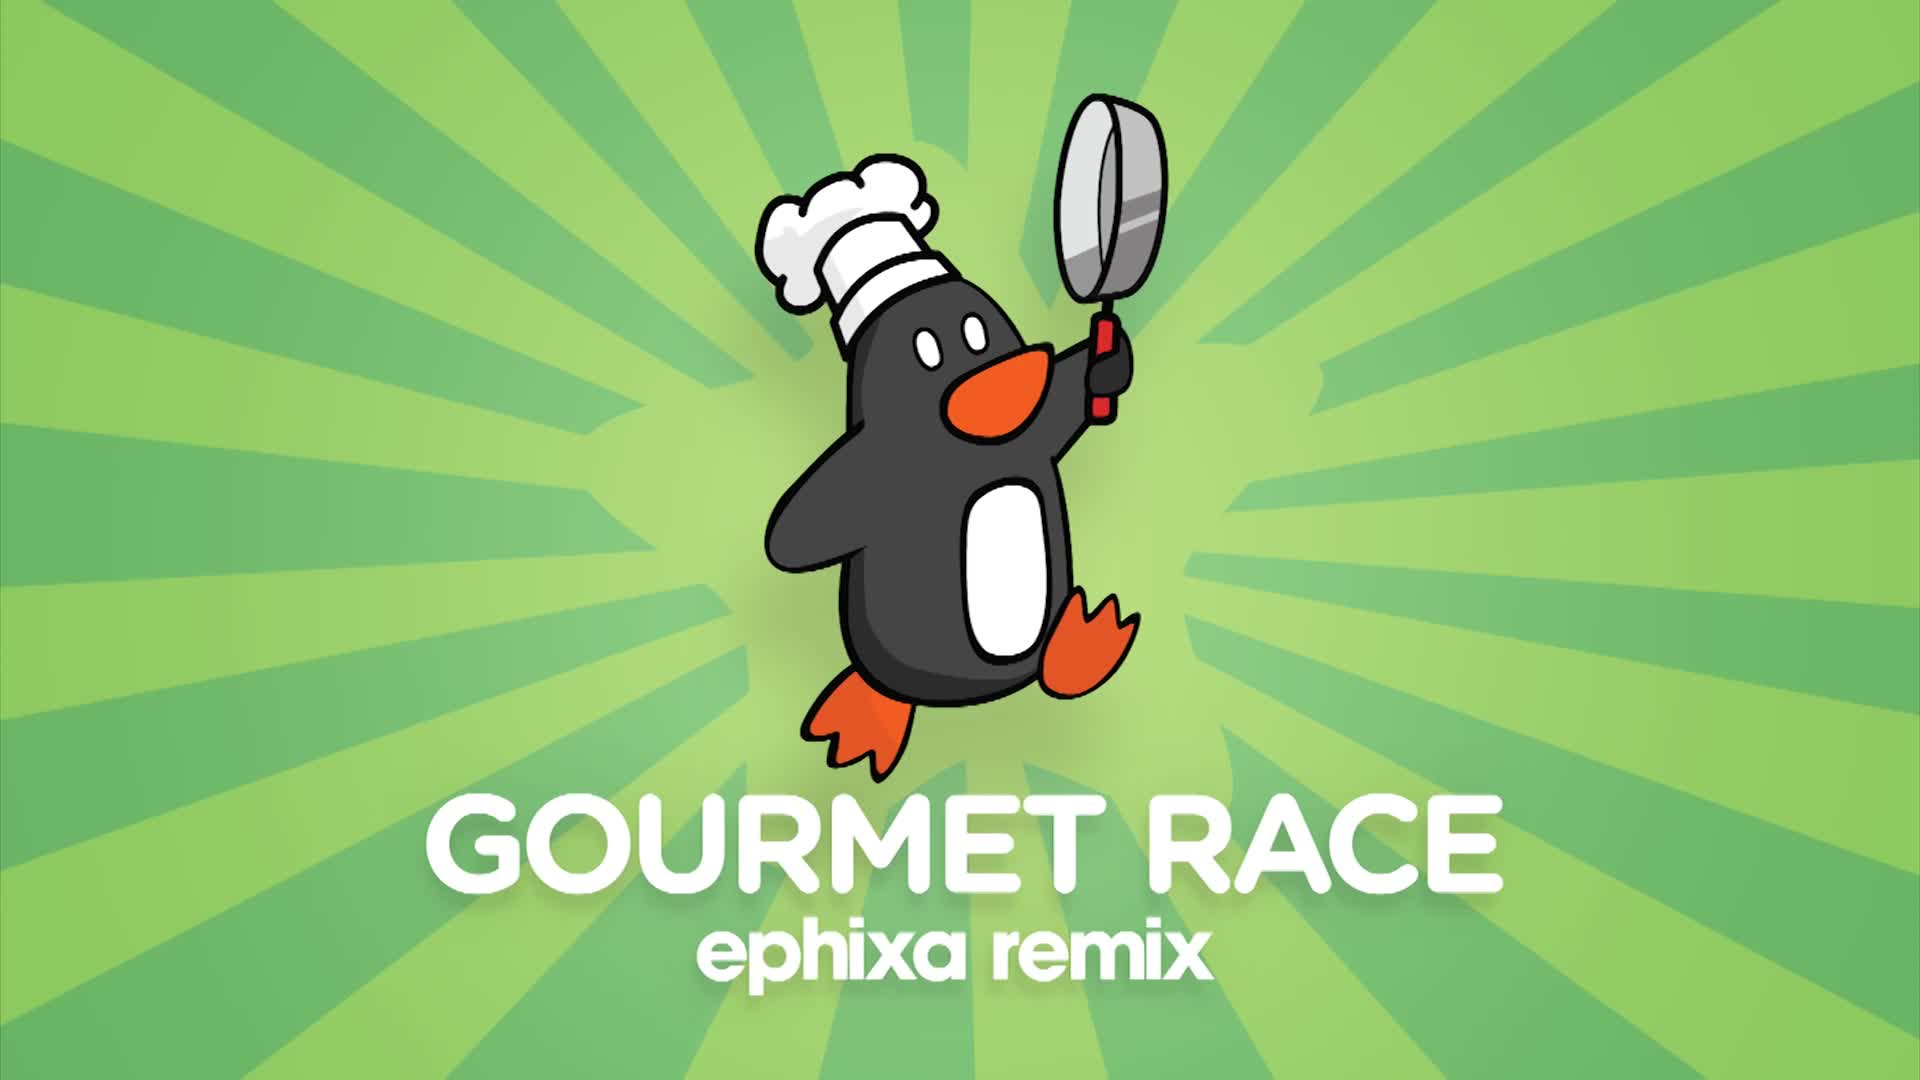 Kirby Gourmet Race Ephixa Dnb Remix Gif Gfycat